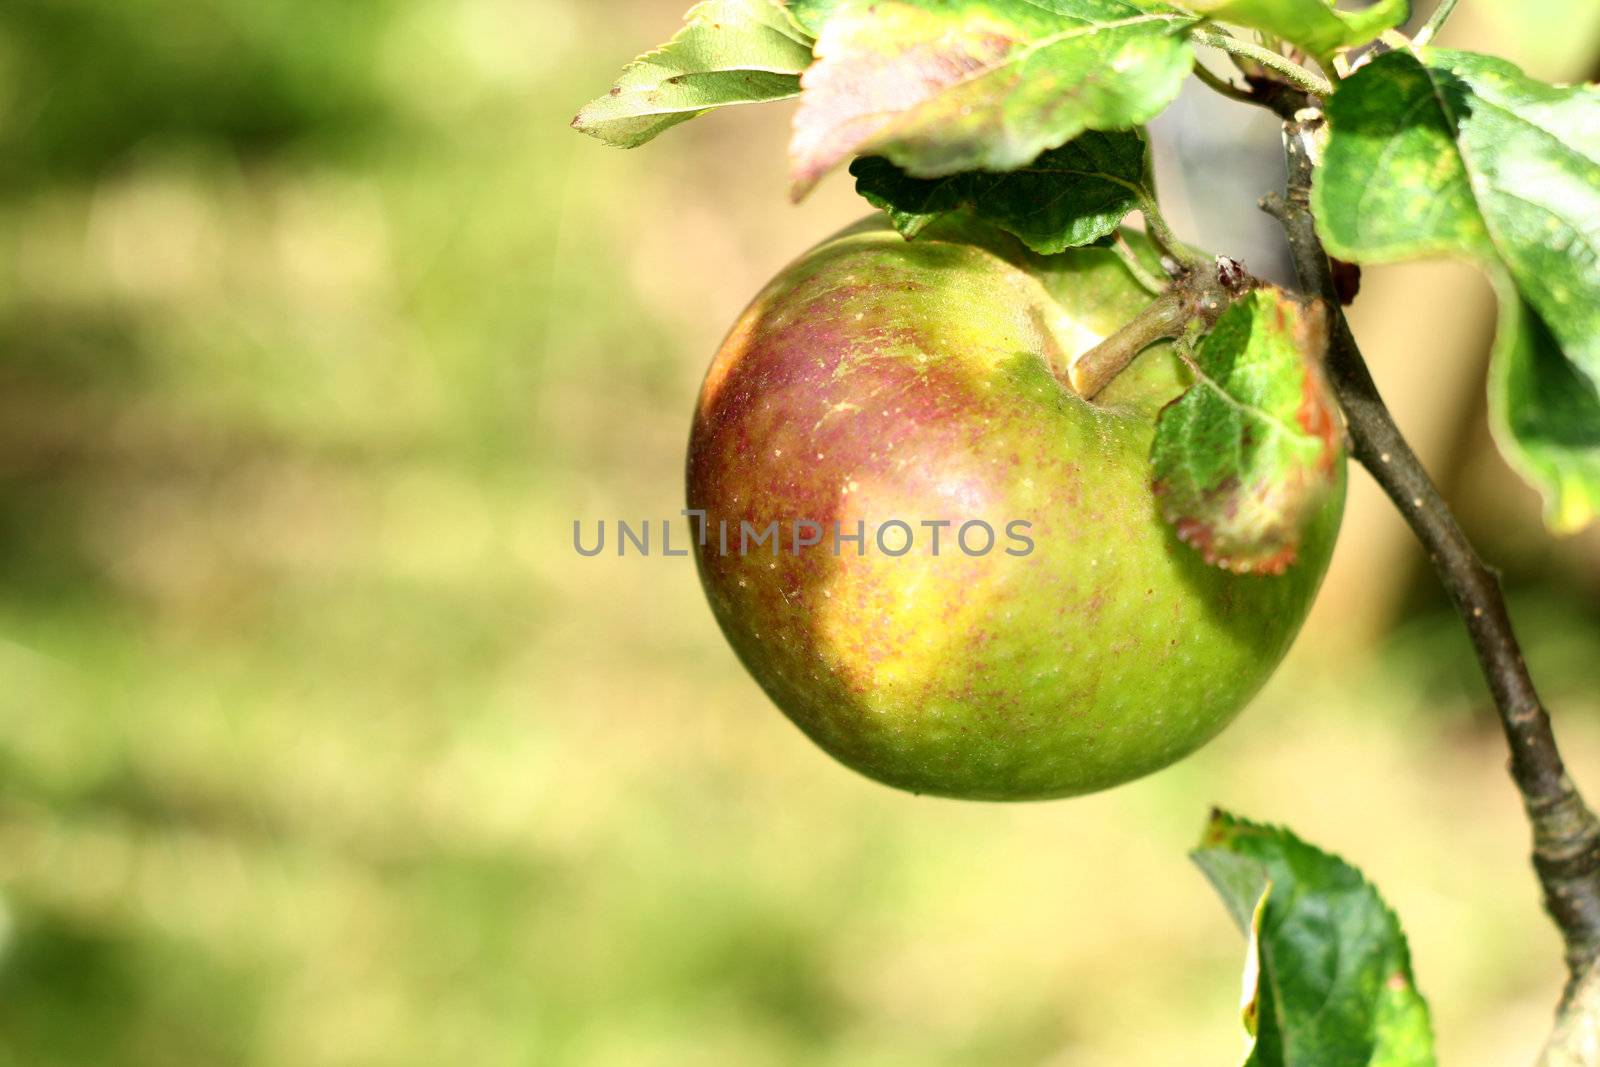 single coxs orange pippin apple growing on a tree